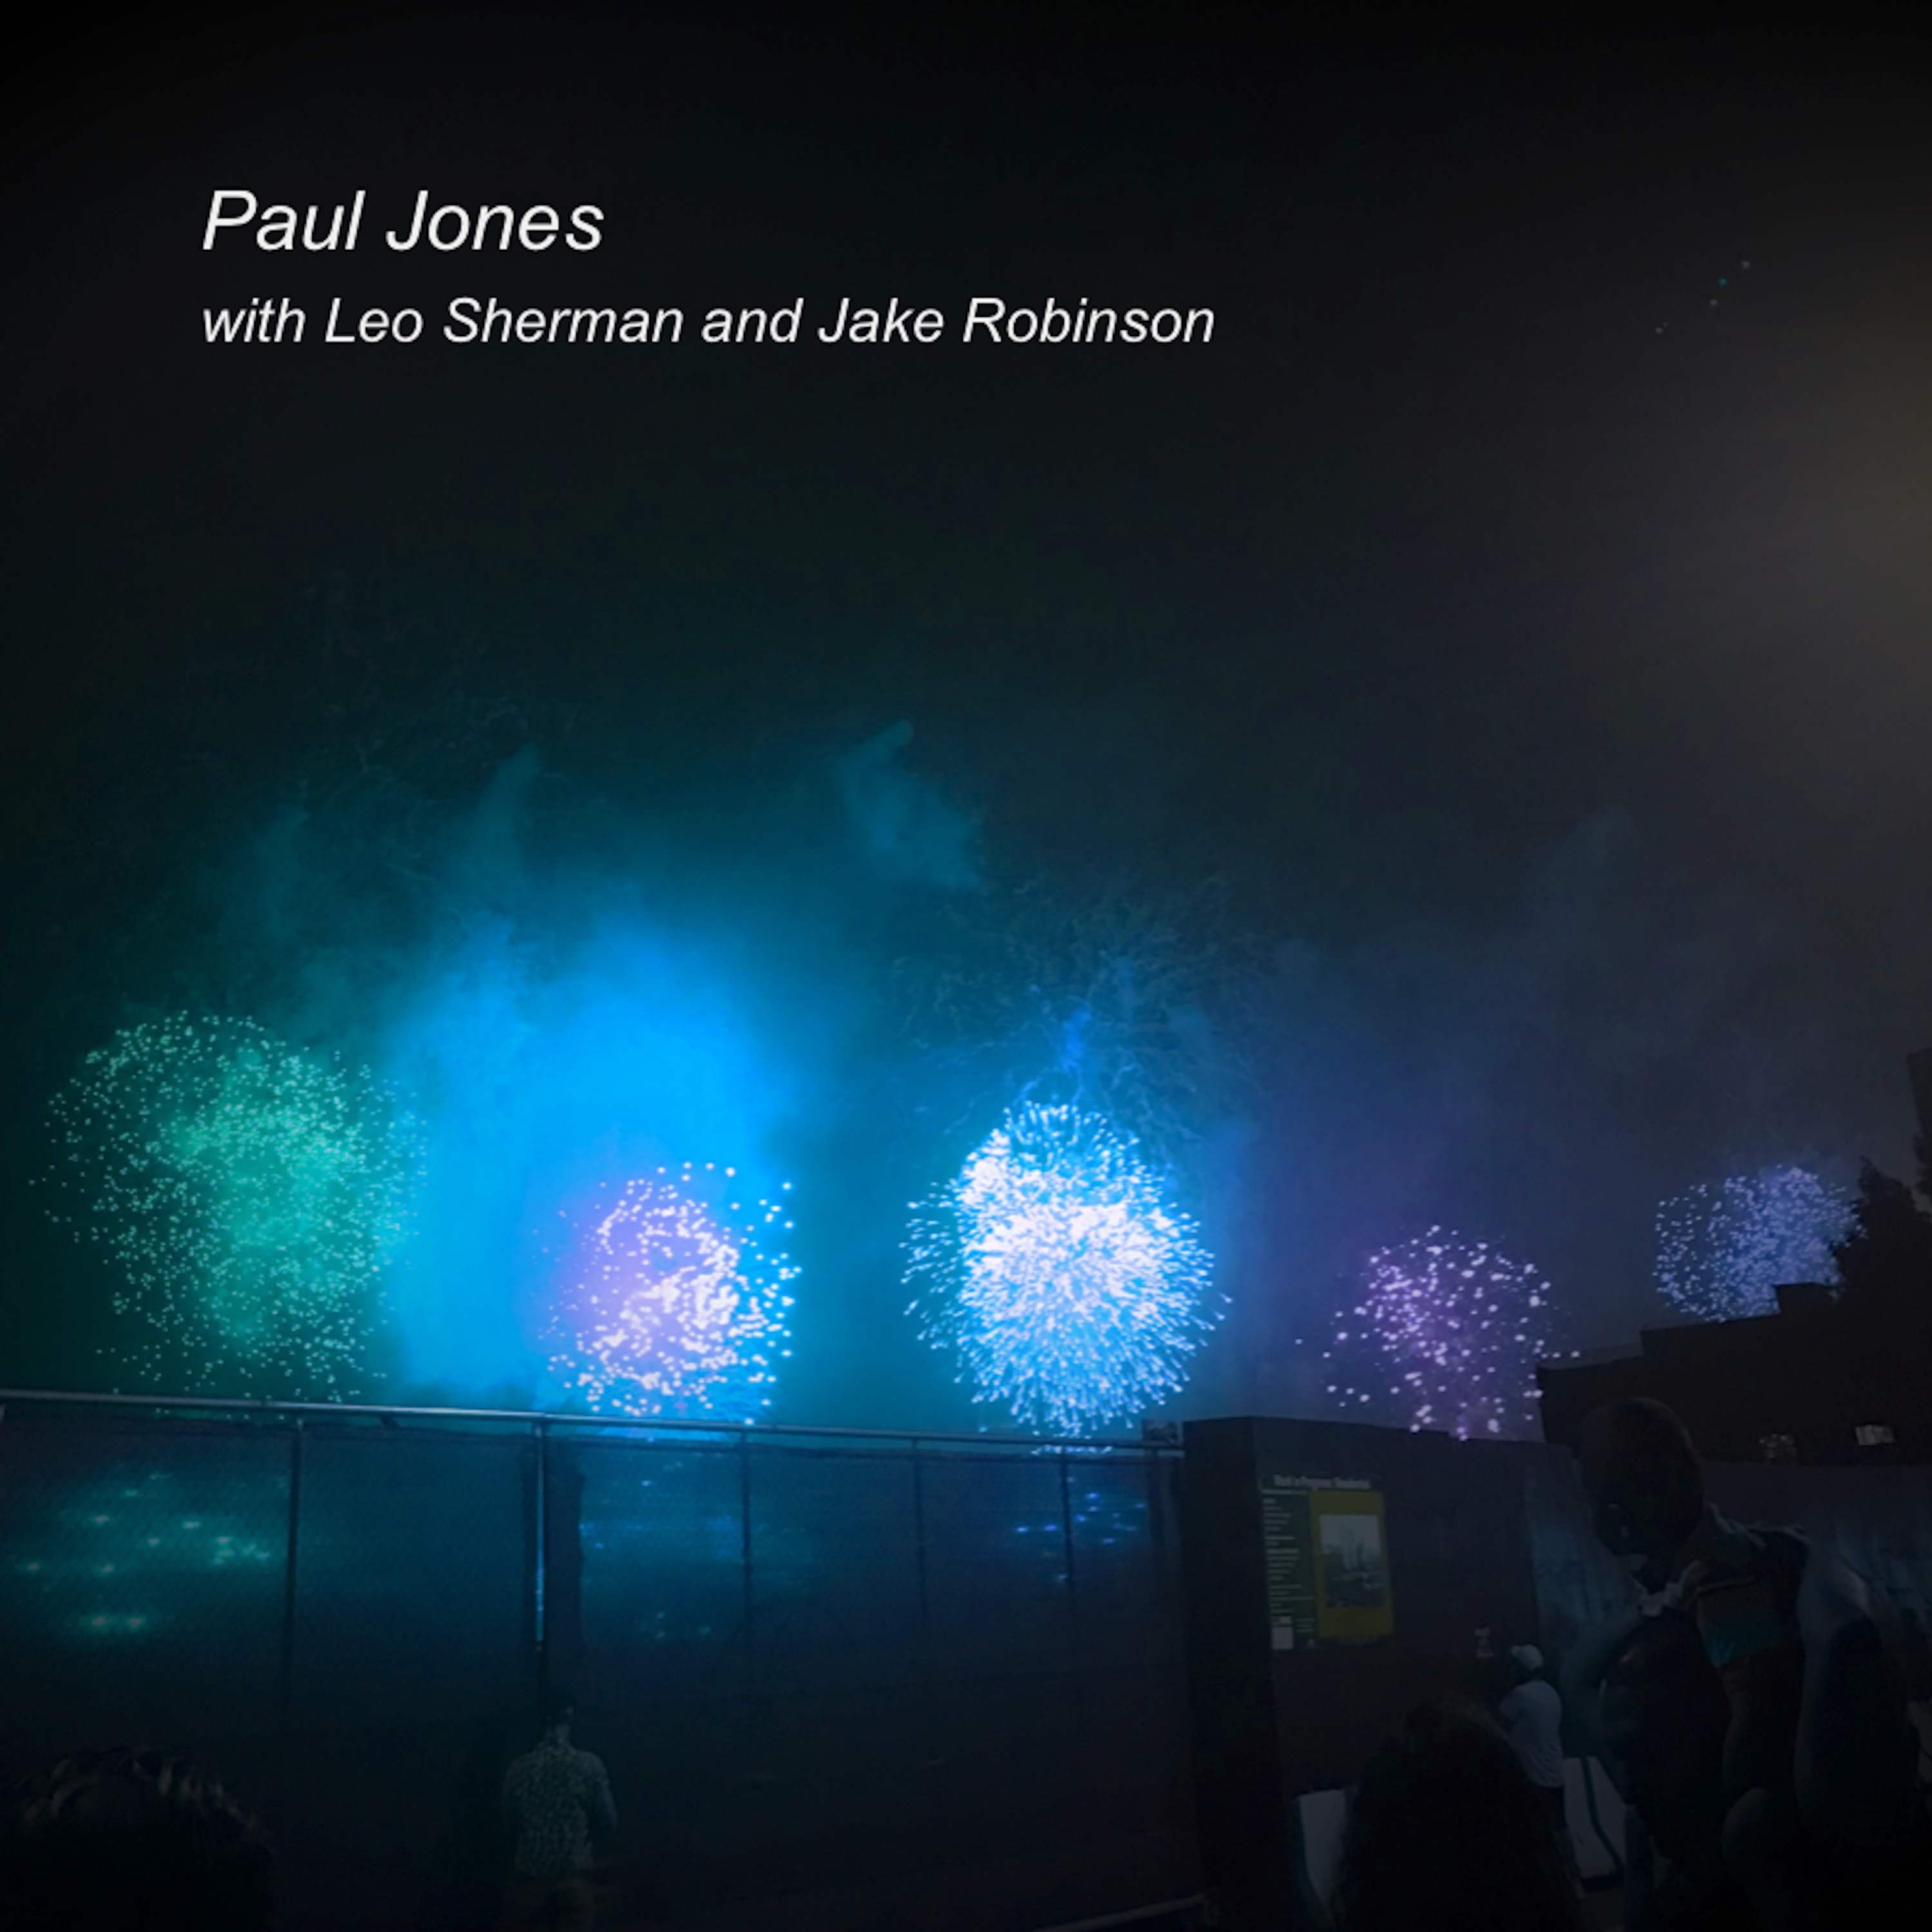 Paul Jones with Leo Sherman and Jake Robinson